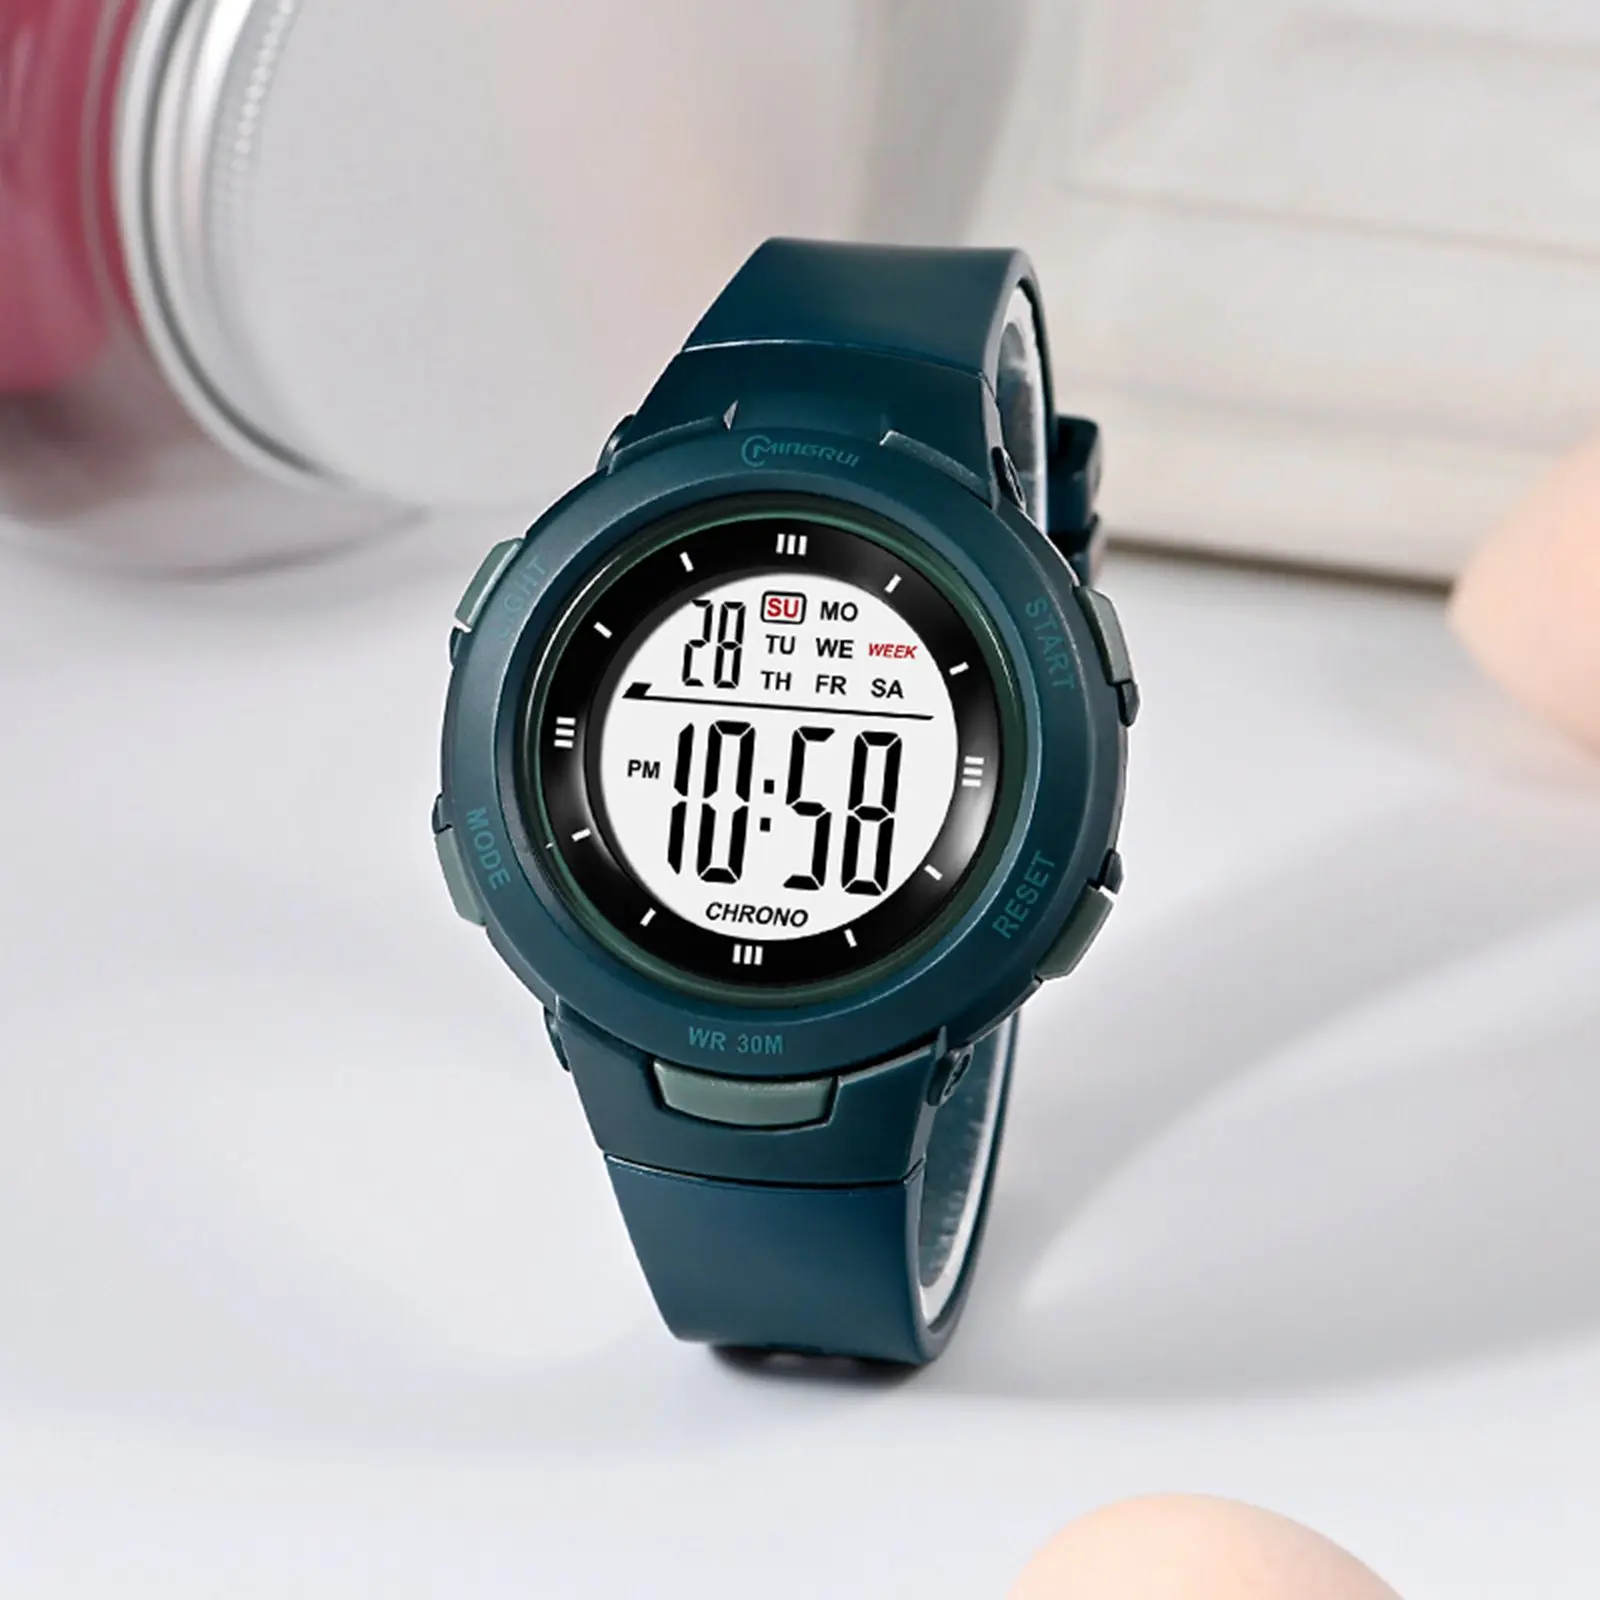 Boys Girls Sport Digital Watch Waterproof Electronic Watches Wrist Watch with Alarm Stopwatch Calendar EL Light for Kids